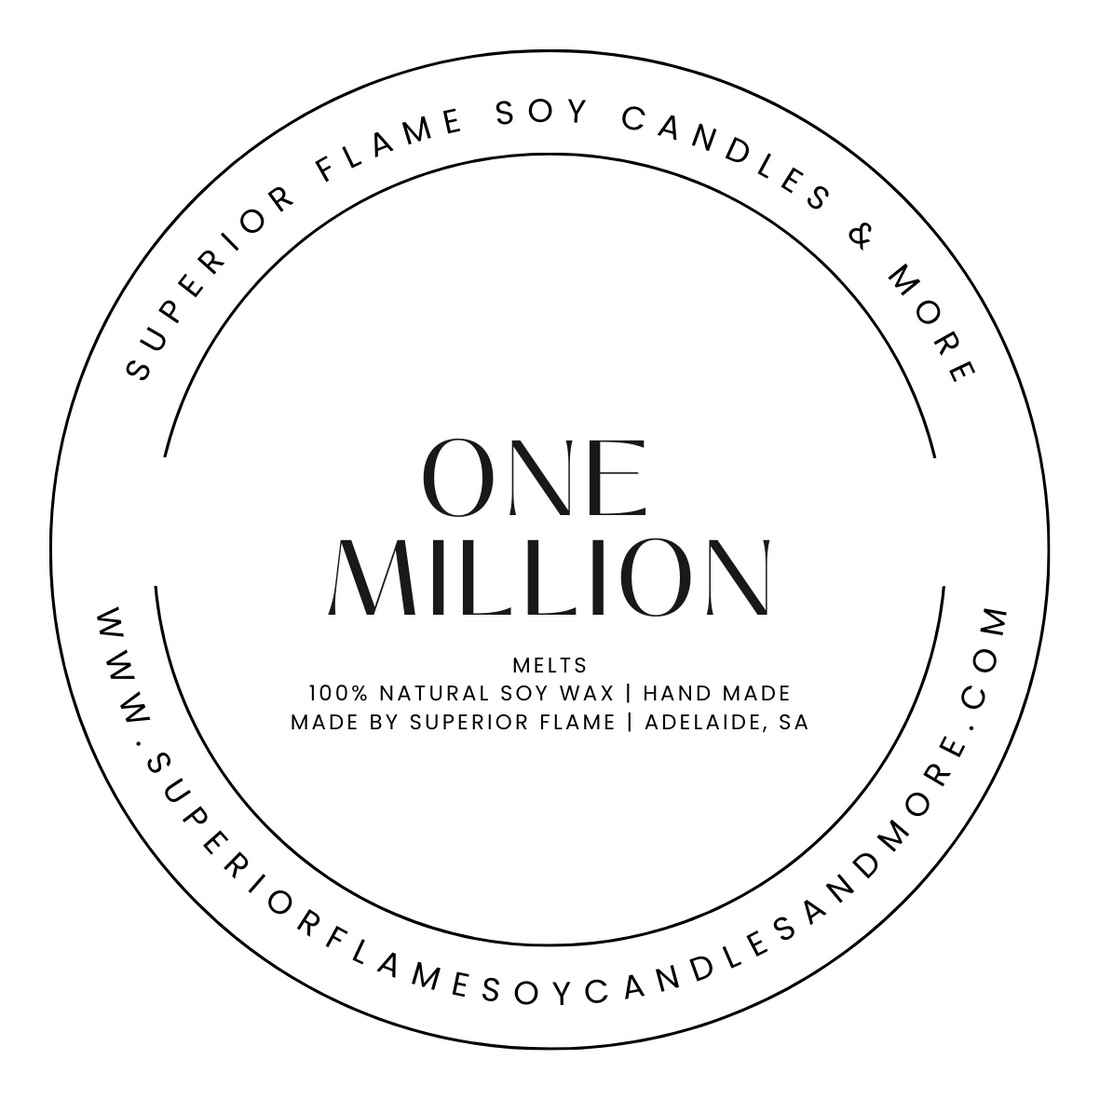 ONE MILLION MELTS